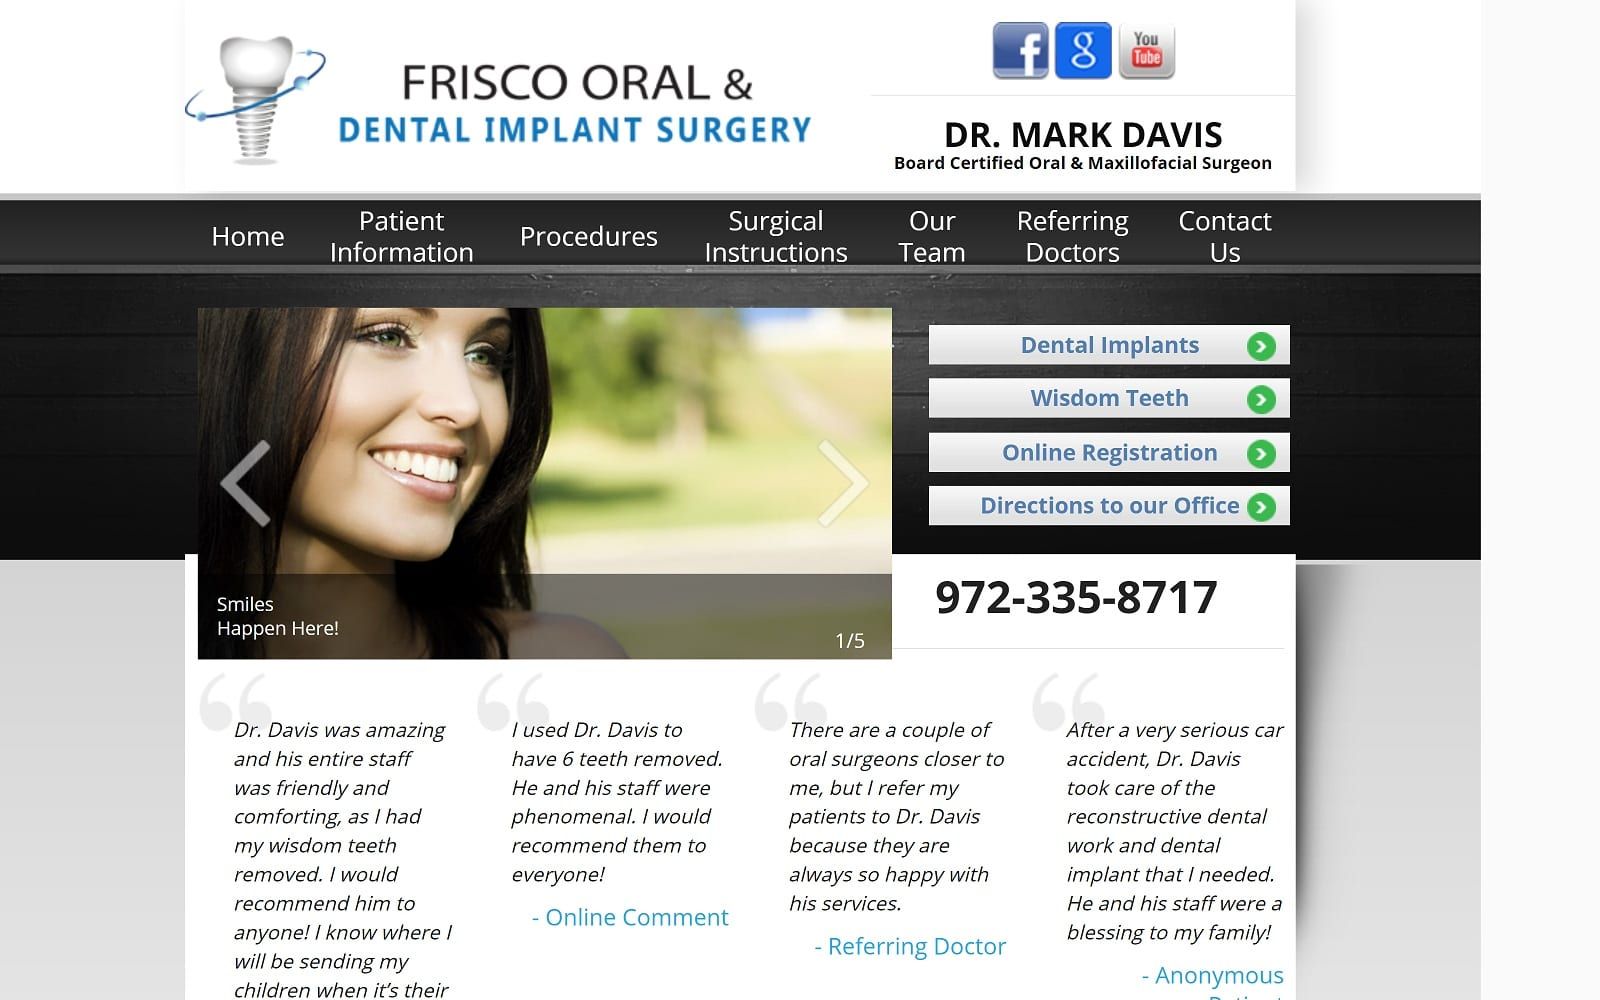 The screenshot of dr. Mark davis friscooralsurgery. Com website